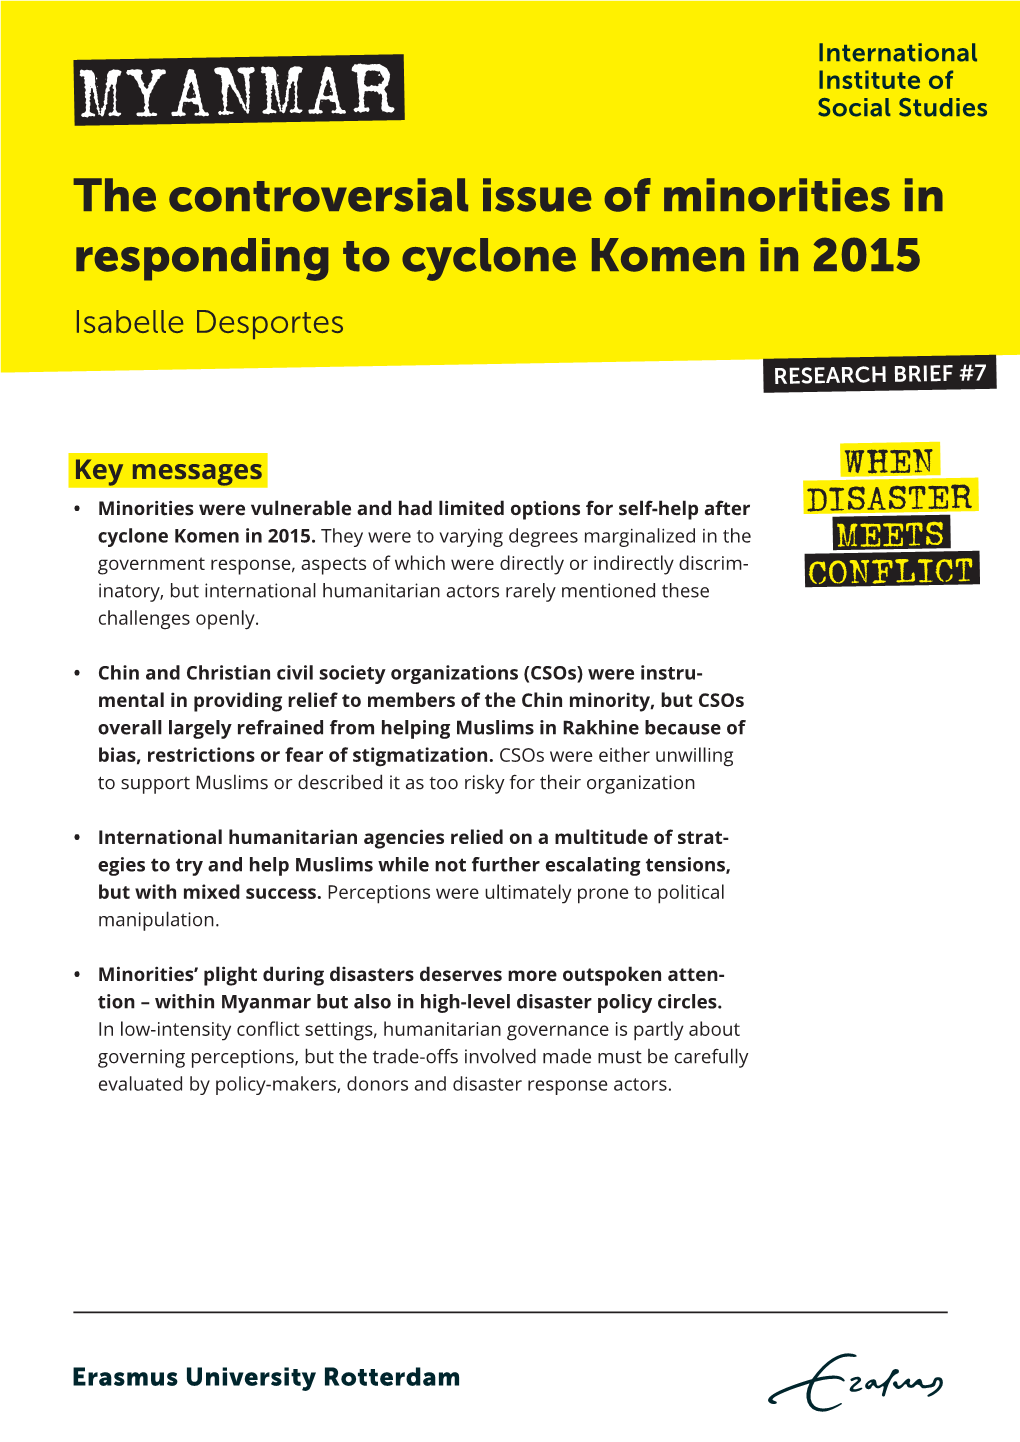 Cyclone Komen Response in Myanmar